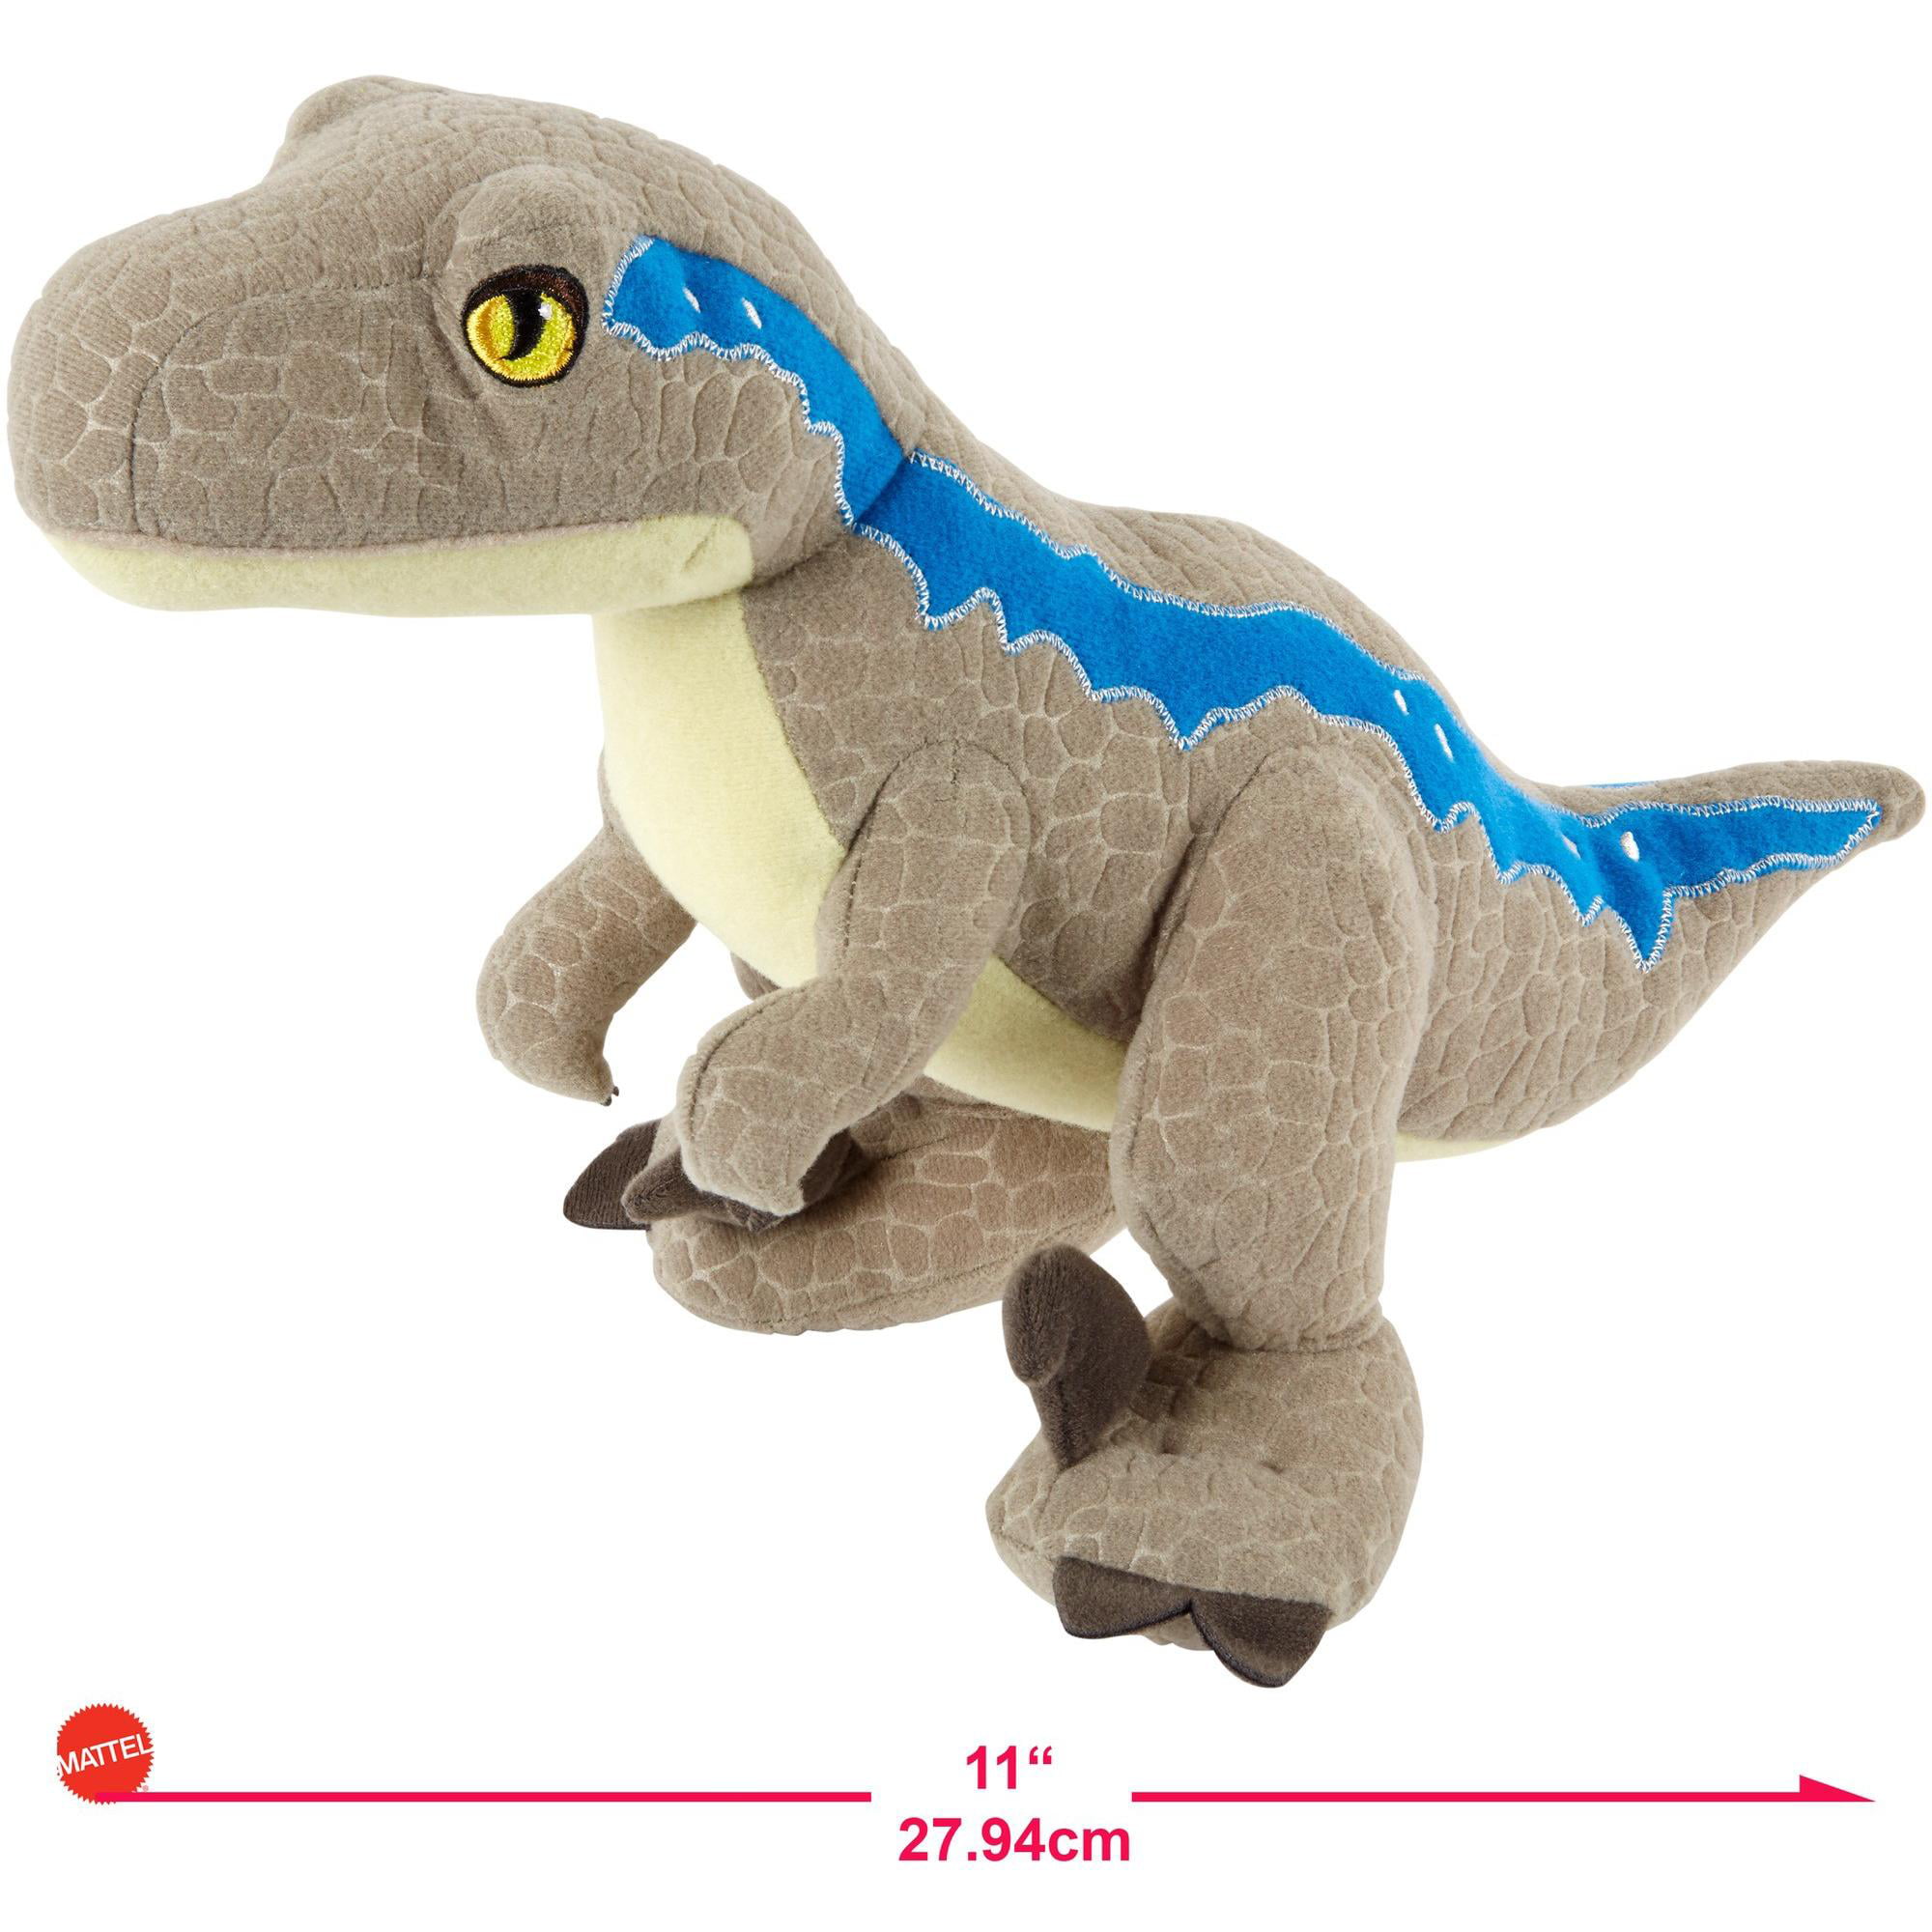 Posh Paws Plush Dinosaur Toys Jurassic World Raptor Blue 